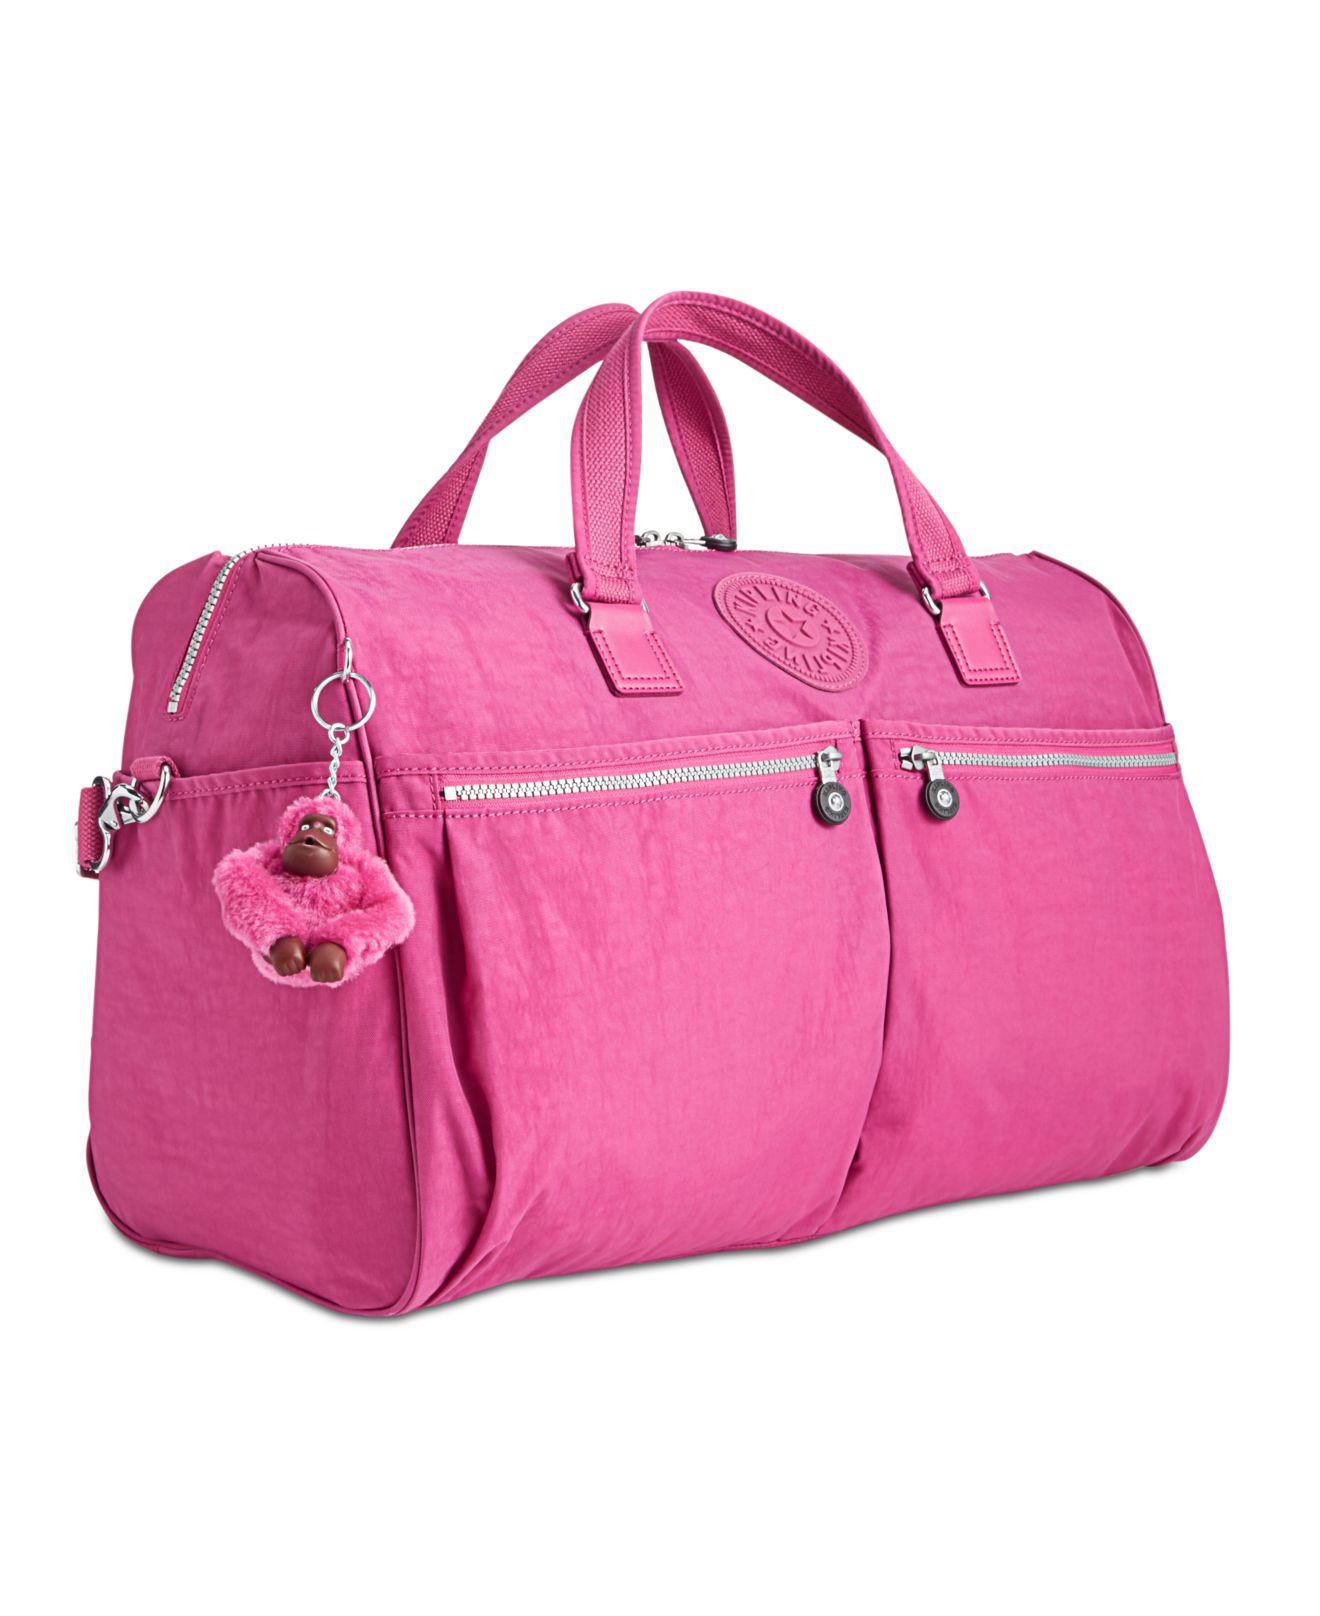 Kipling Itska Extra-large Duffle Bag in Pink